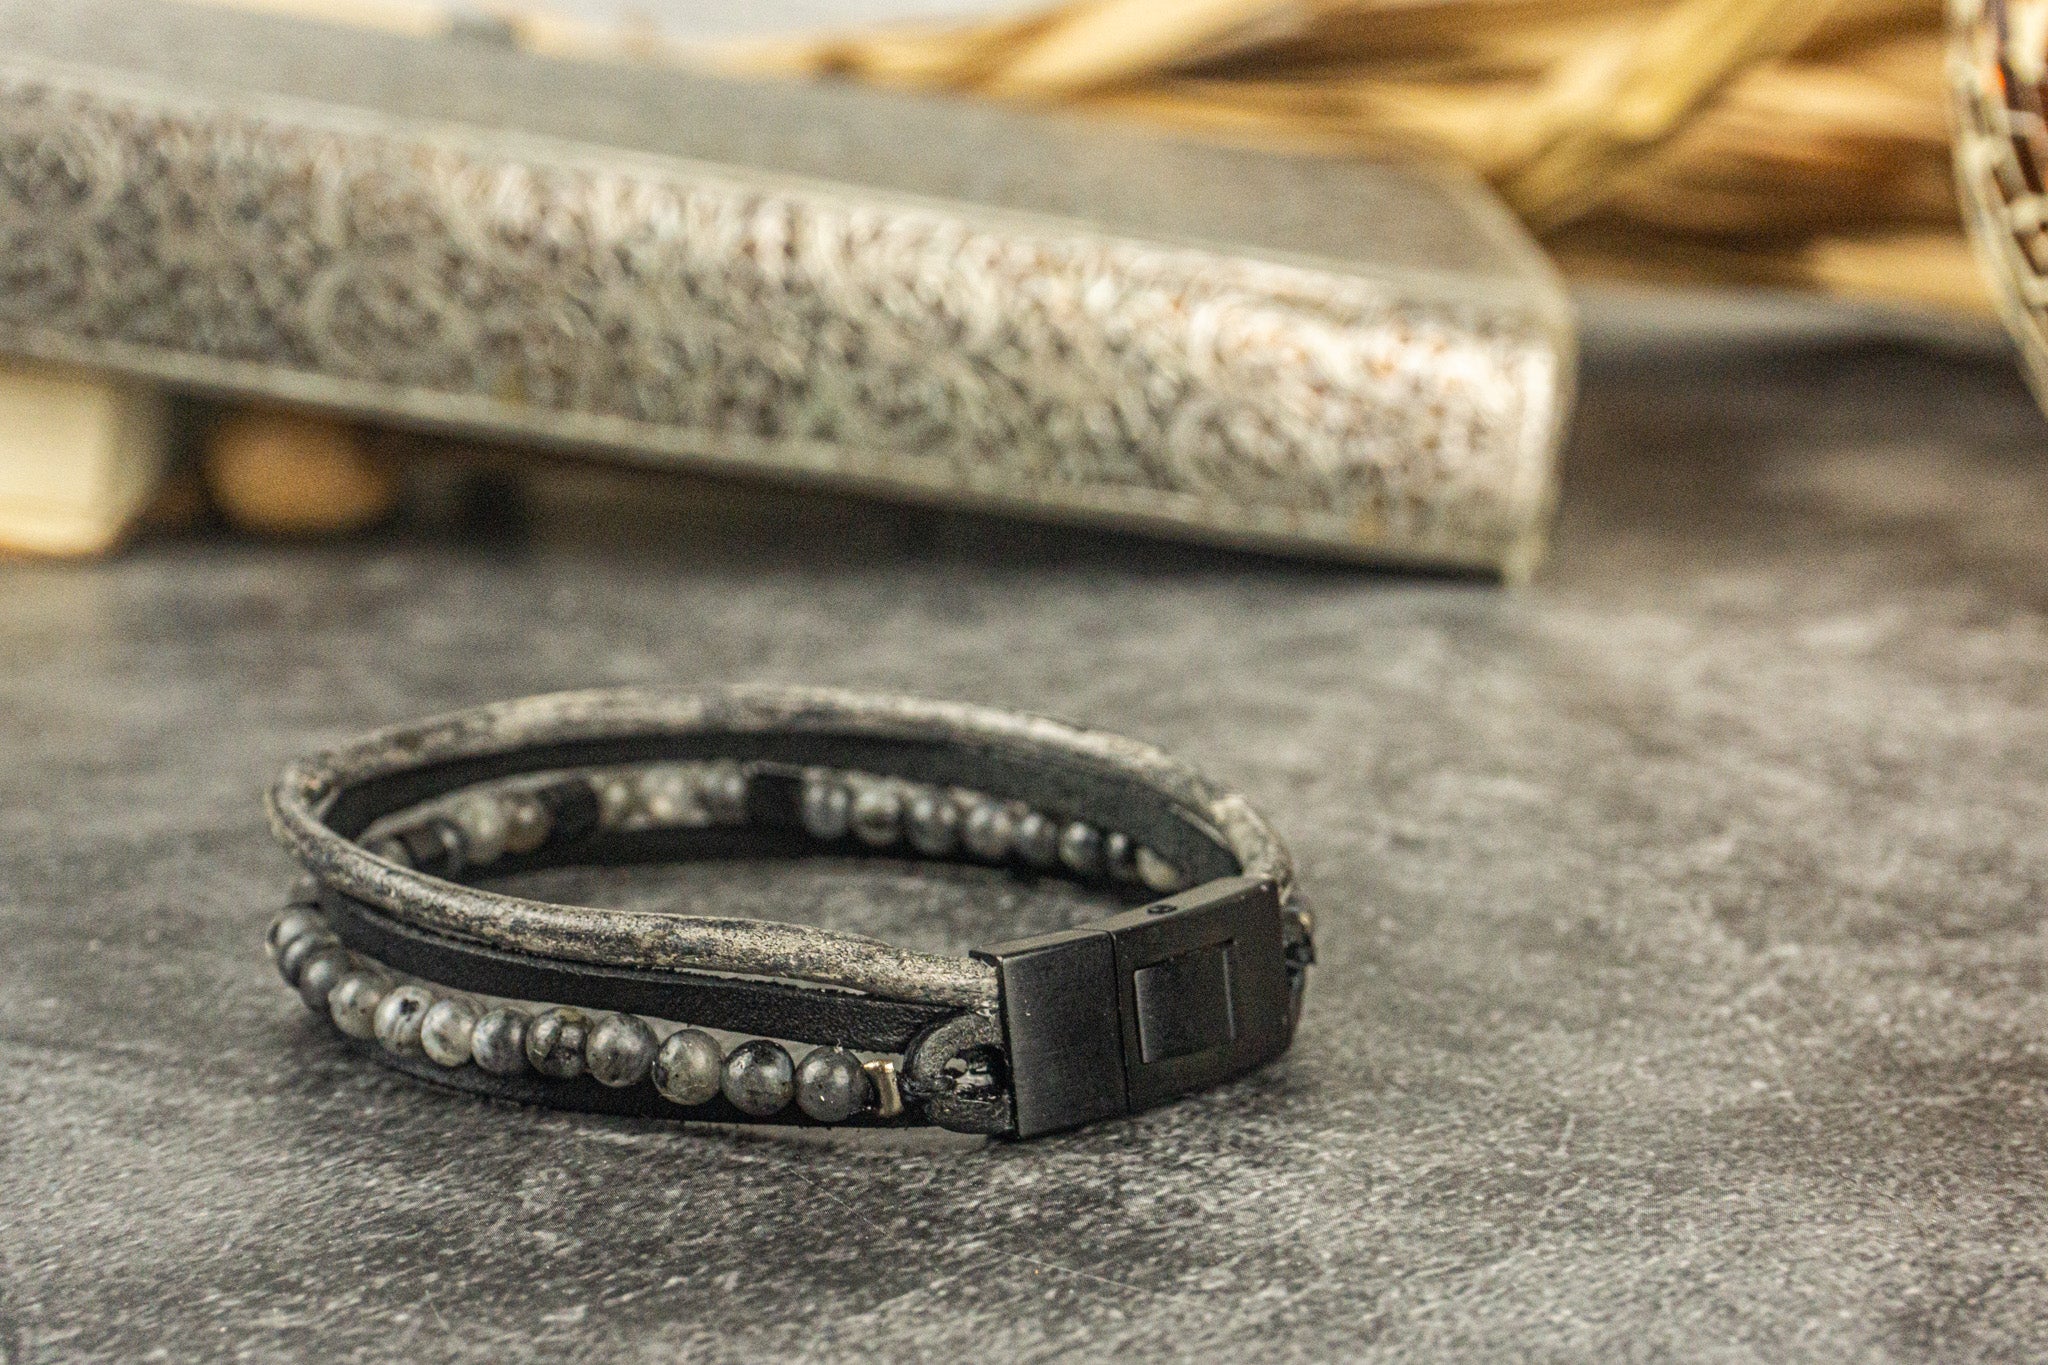 vintage leather layered bracelet with labradorite gemstones and black stainless steel closure - wander jewellery